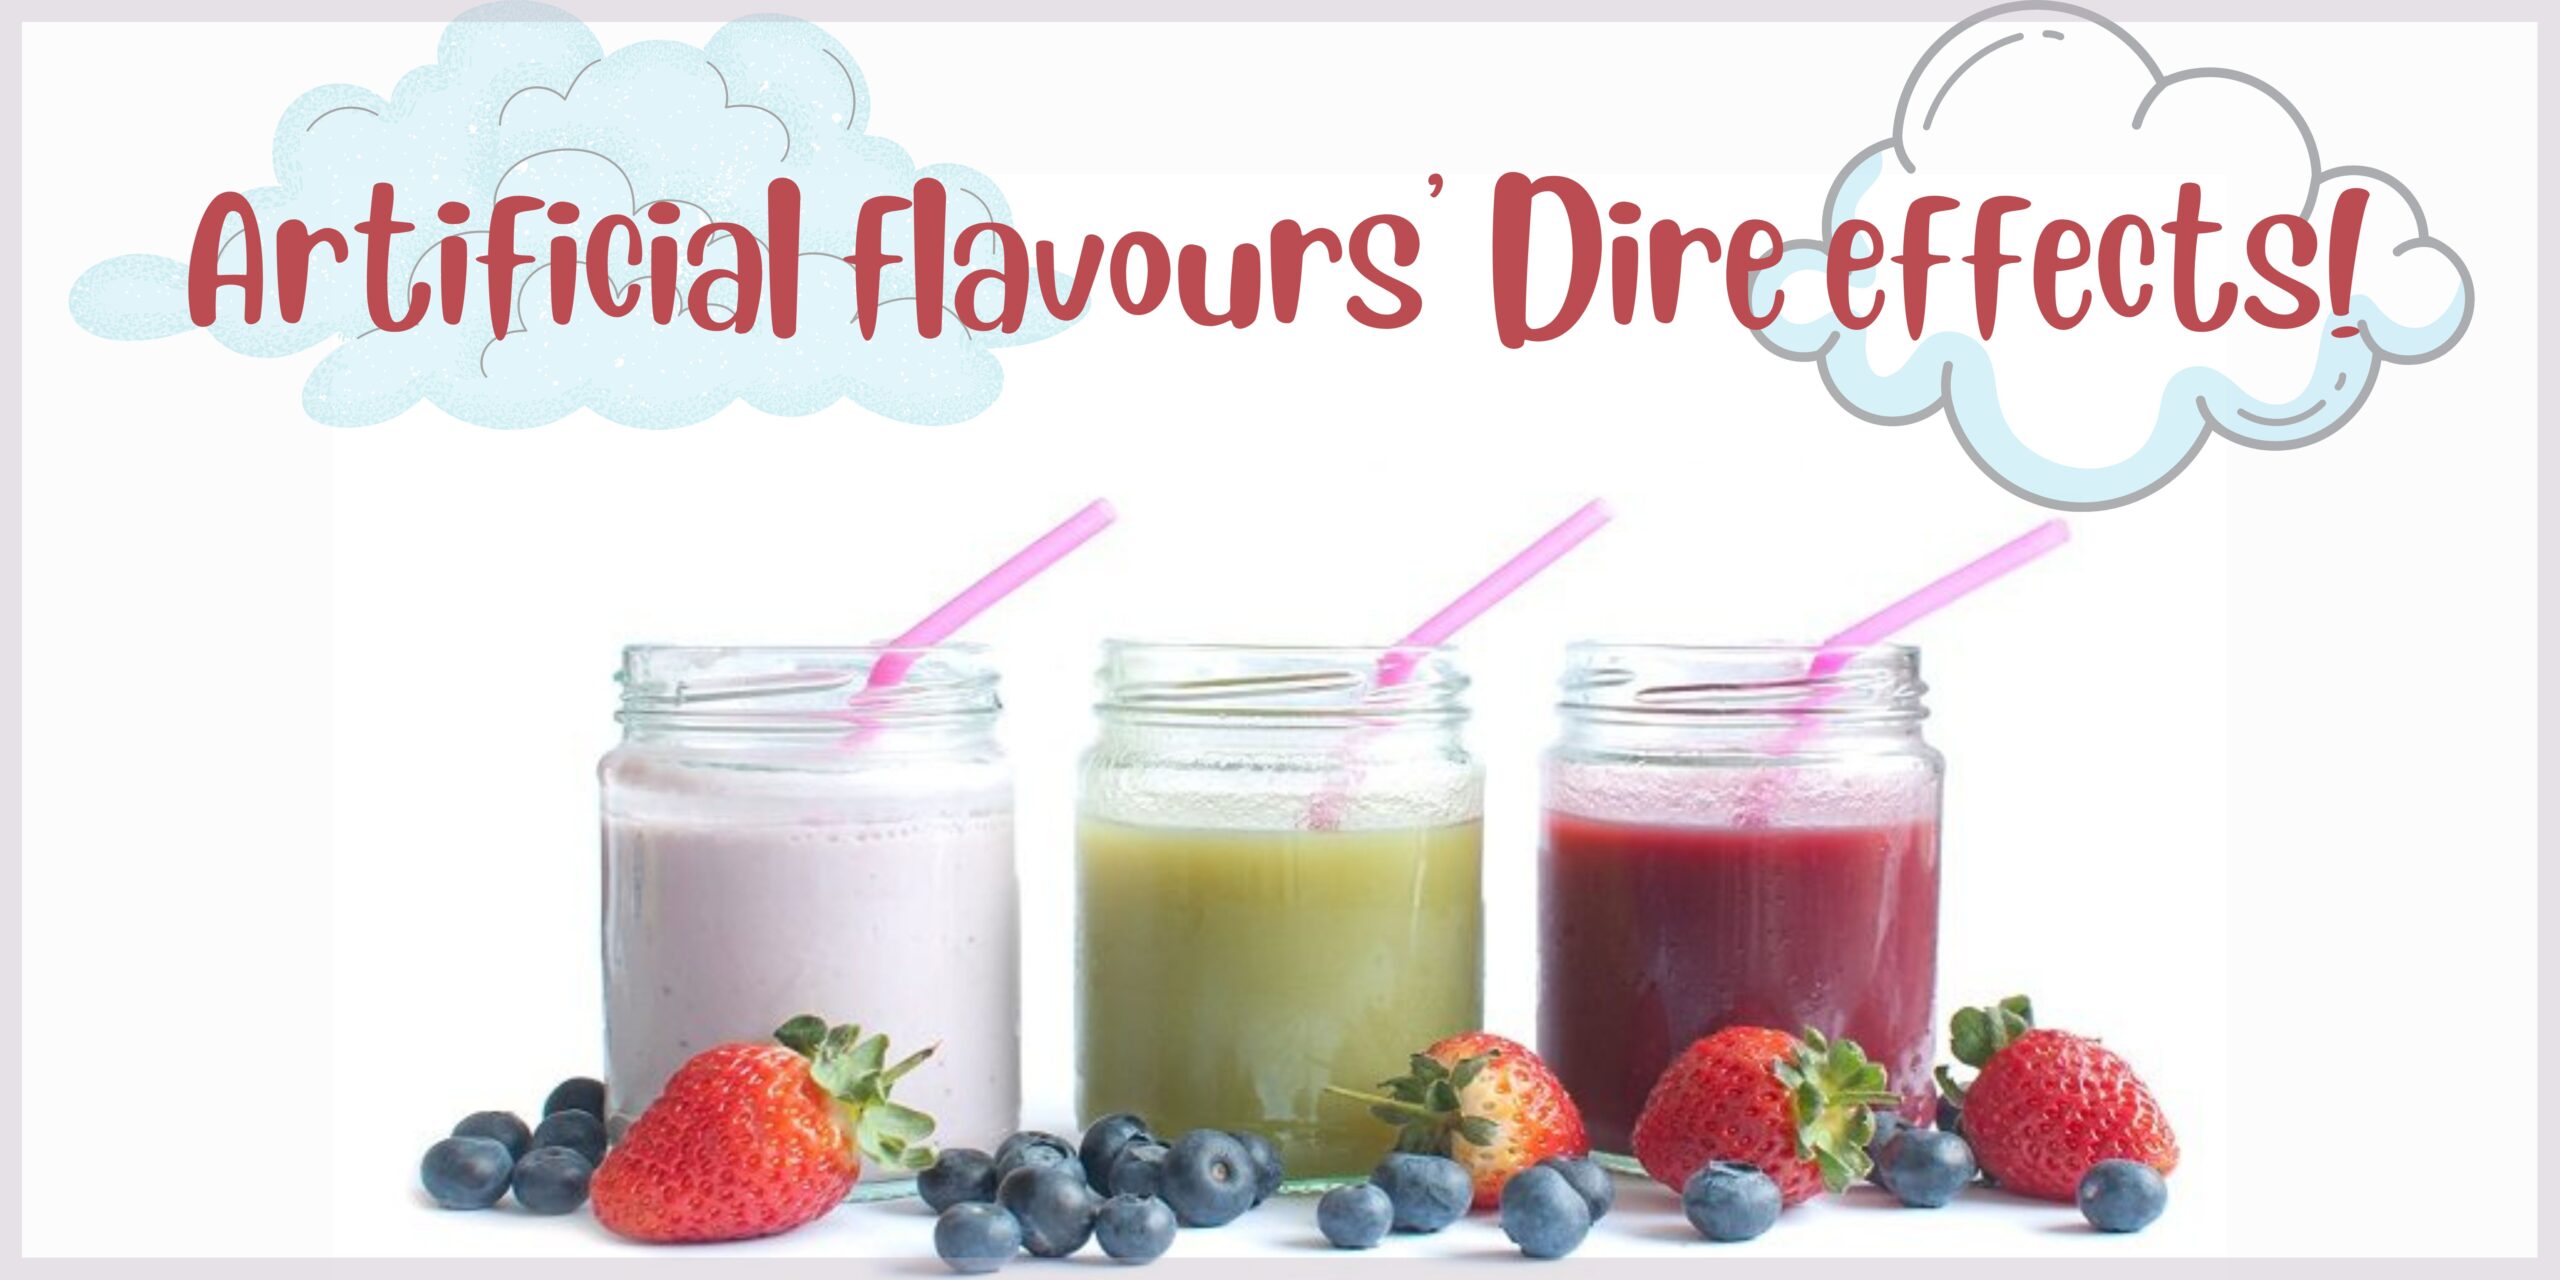 Artificial flavours’ dire effects!